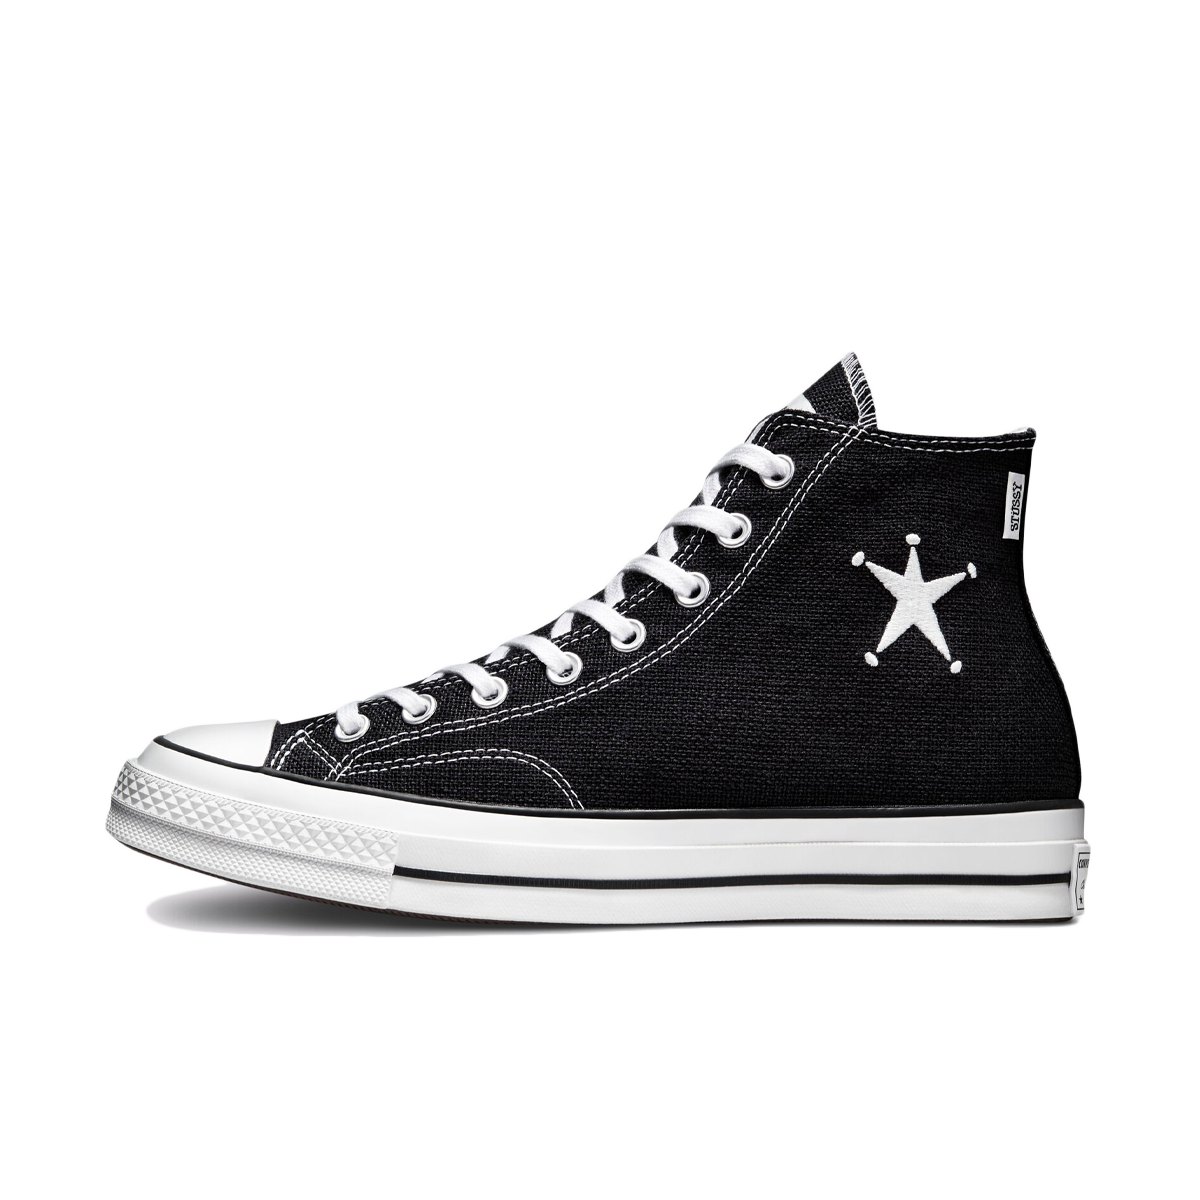 Stussy x Converse Chuck 70 'Black' A01765C